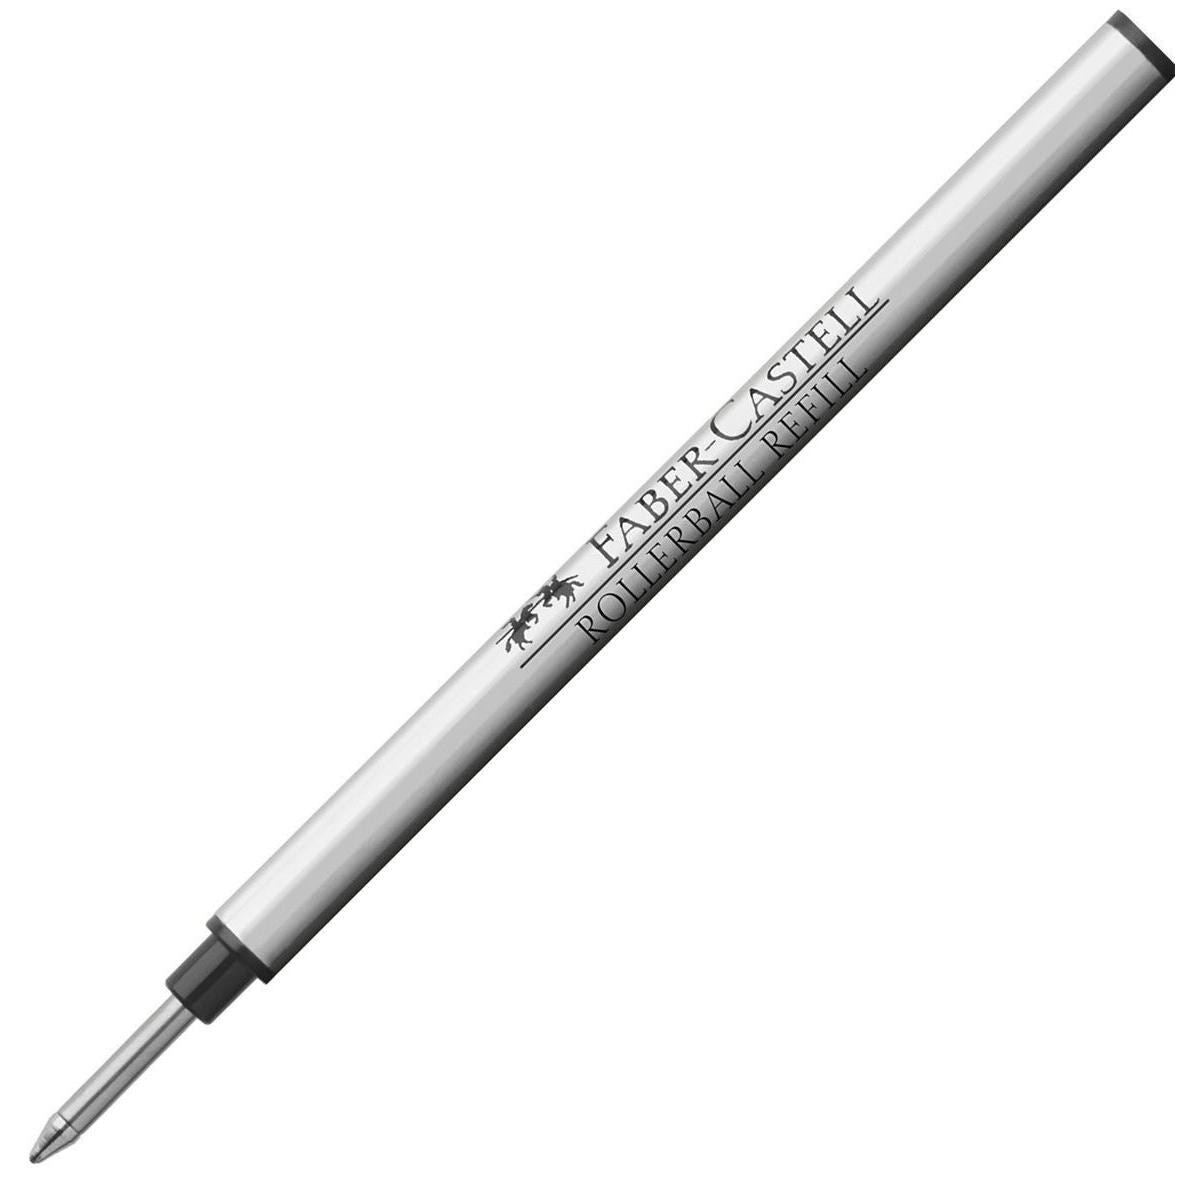 Faber-Castell Fineliner Pen Refills